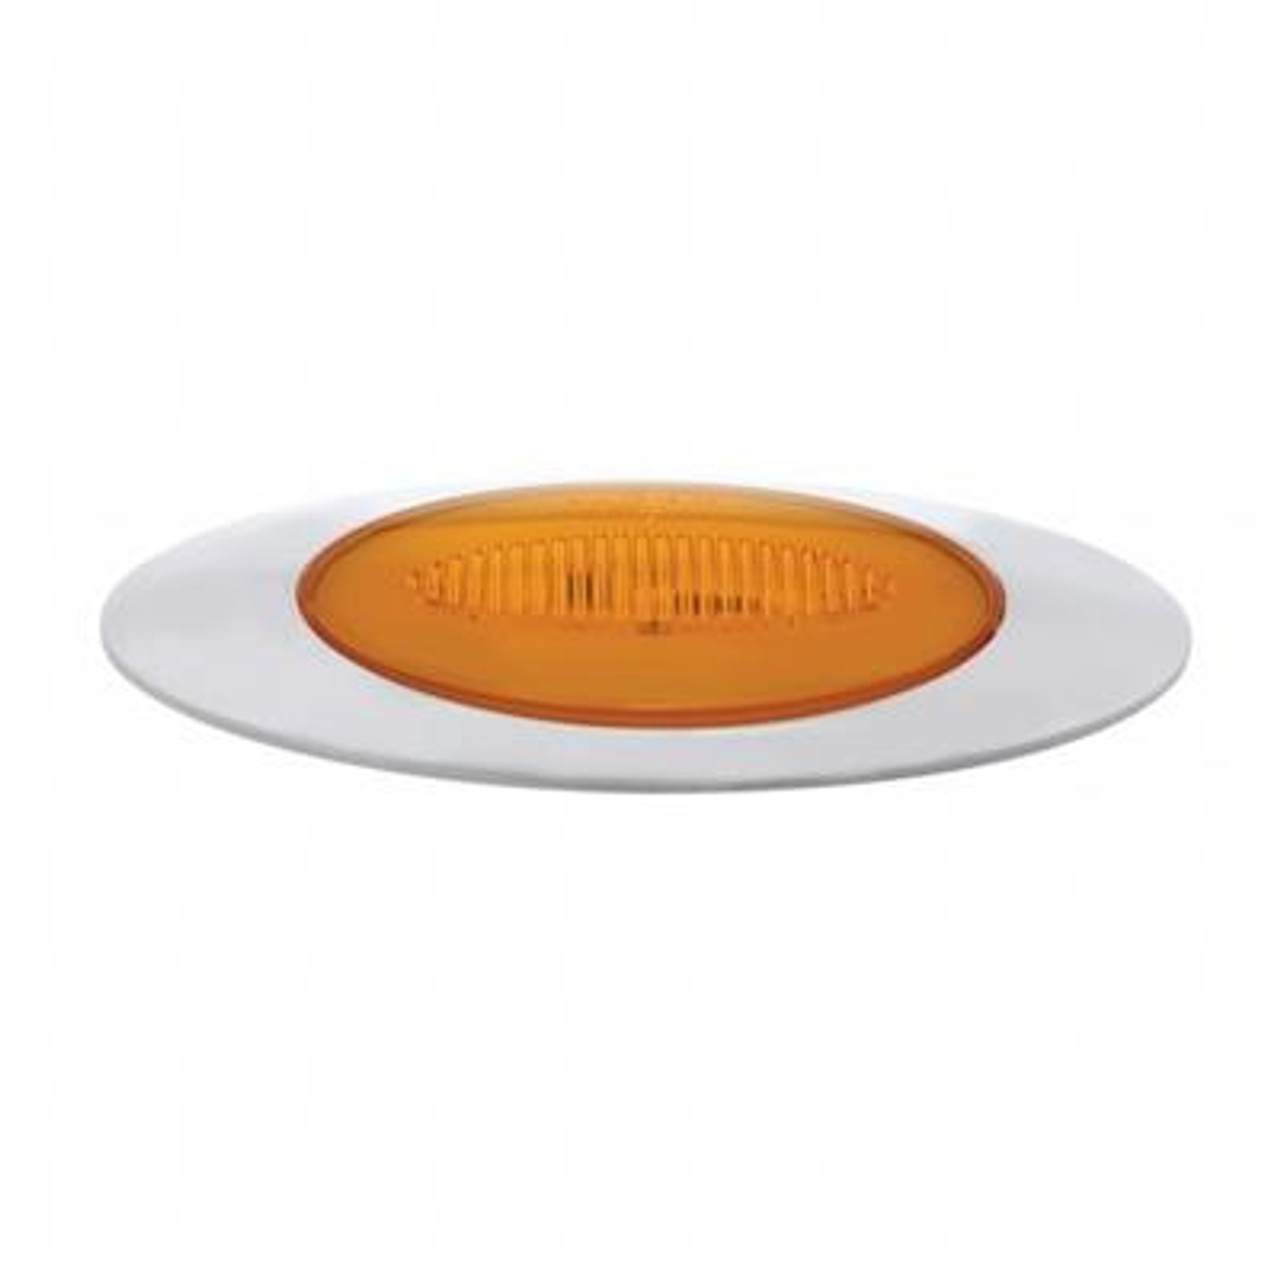 13 LED M1 Millennium GloLight (Clearance/Marker) - Amber LED/Amber Lens